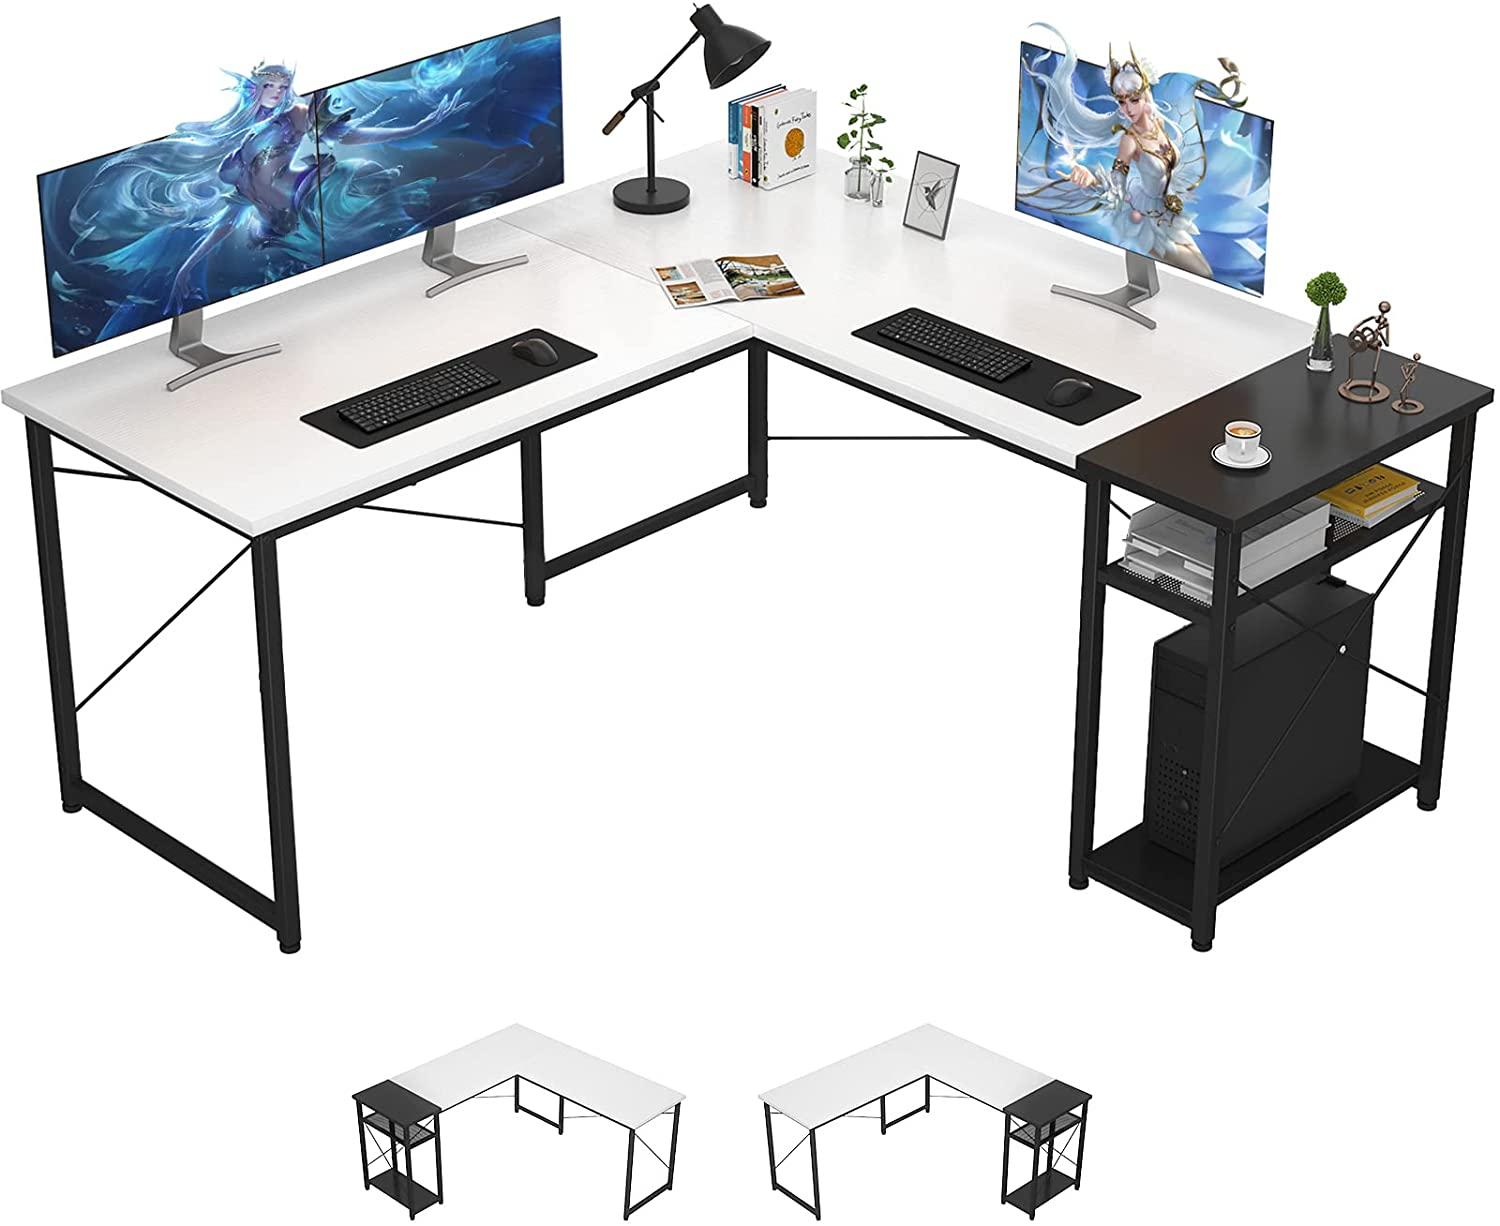 Ecoprsio L-Shaped Desk Large L Shaped Gaming Desk for $95.99 Shipped